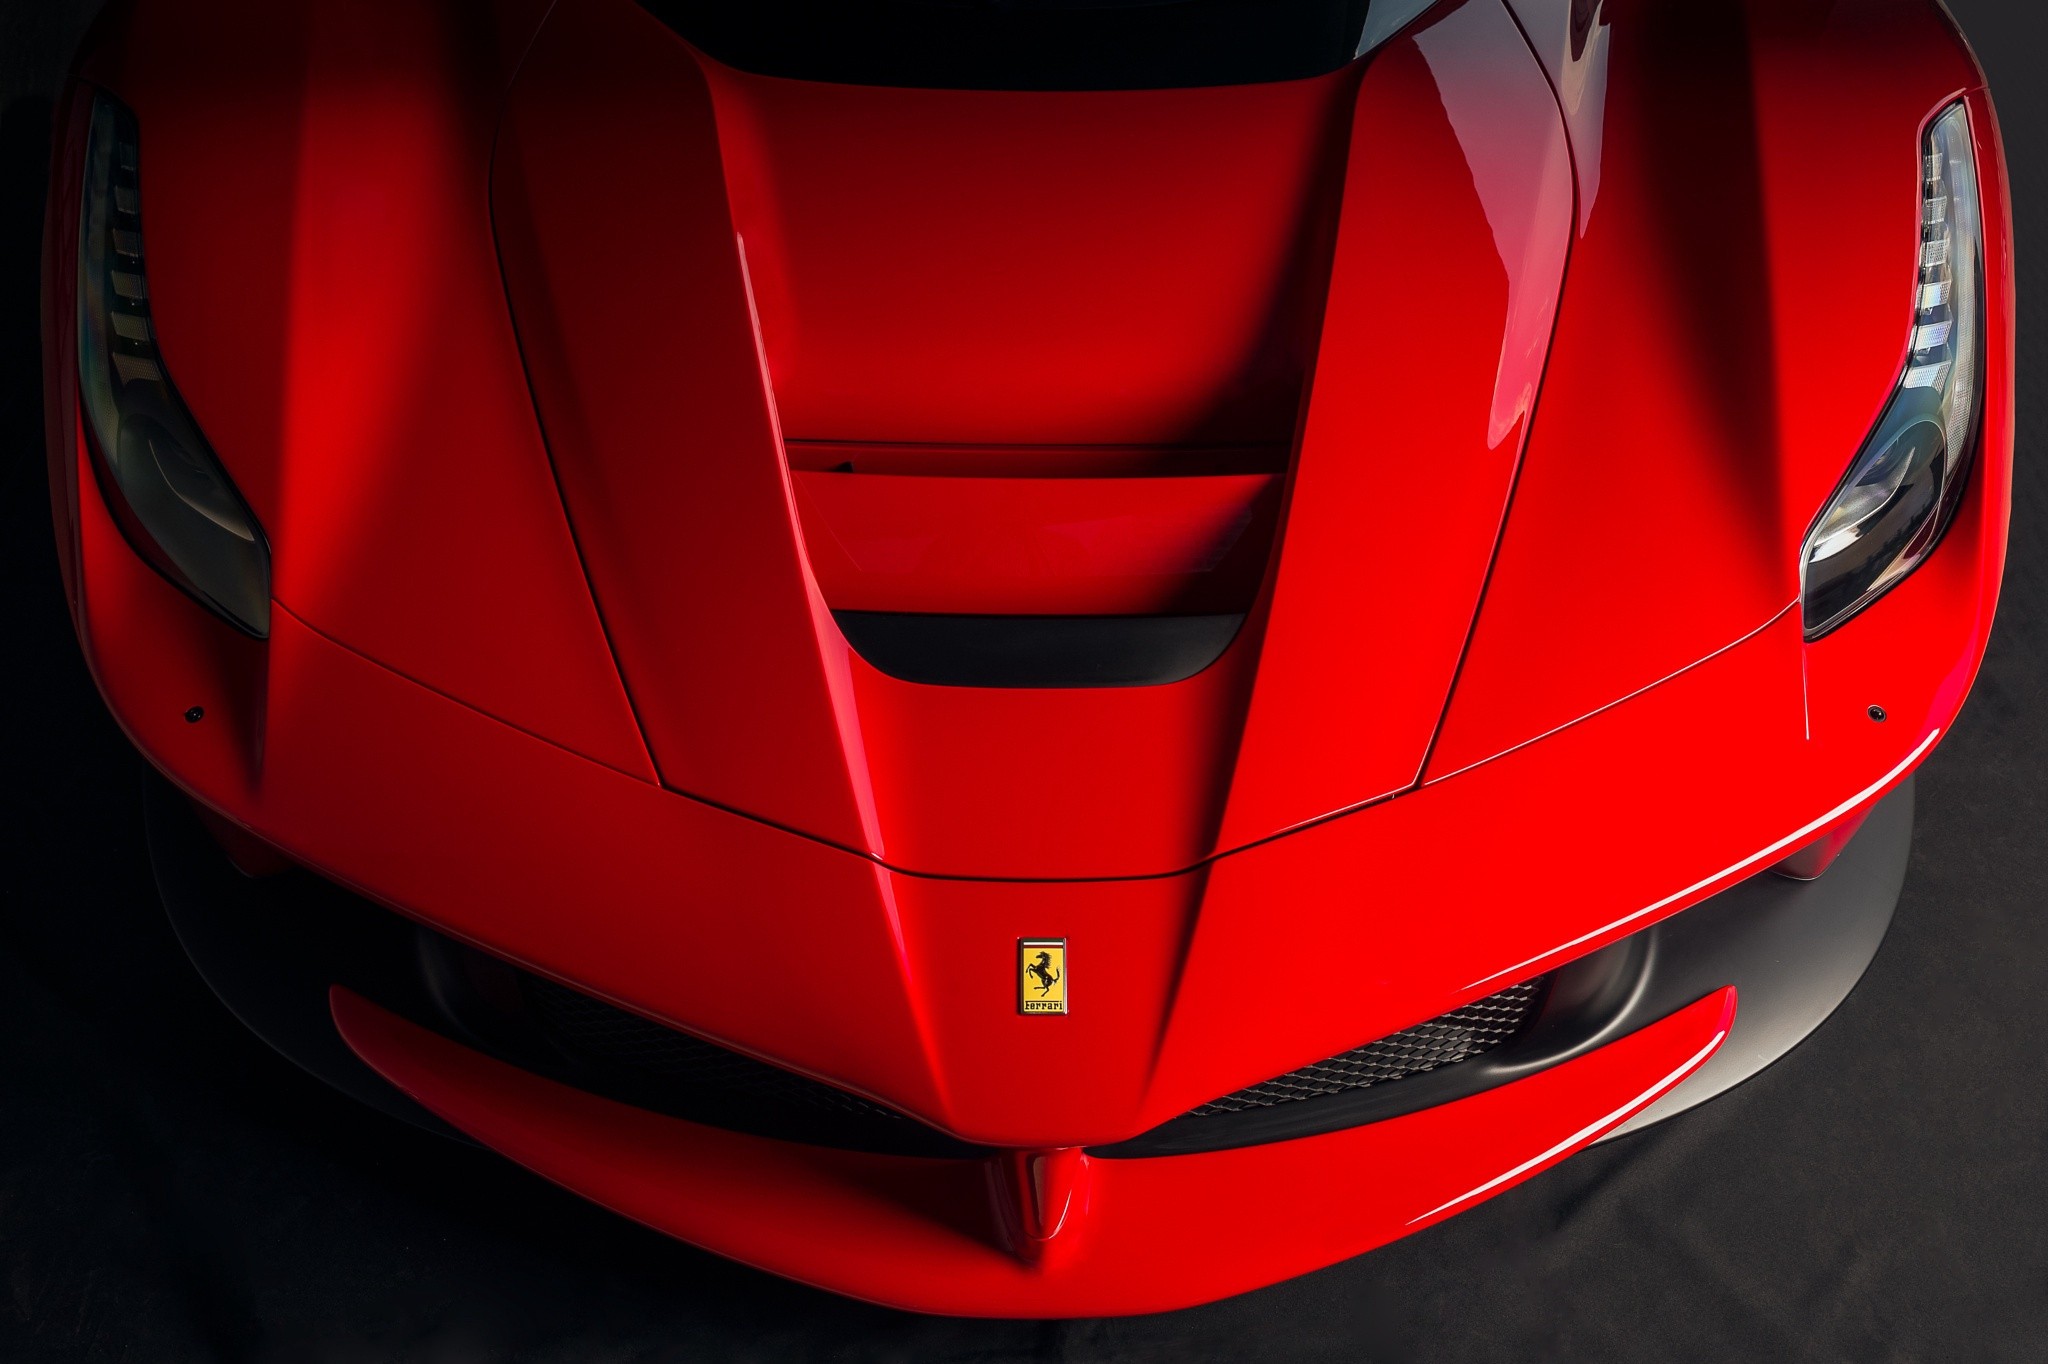 Cool Ferrari Wallpapers